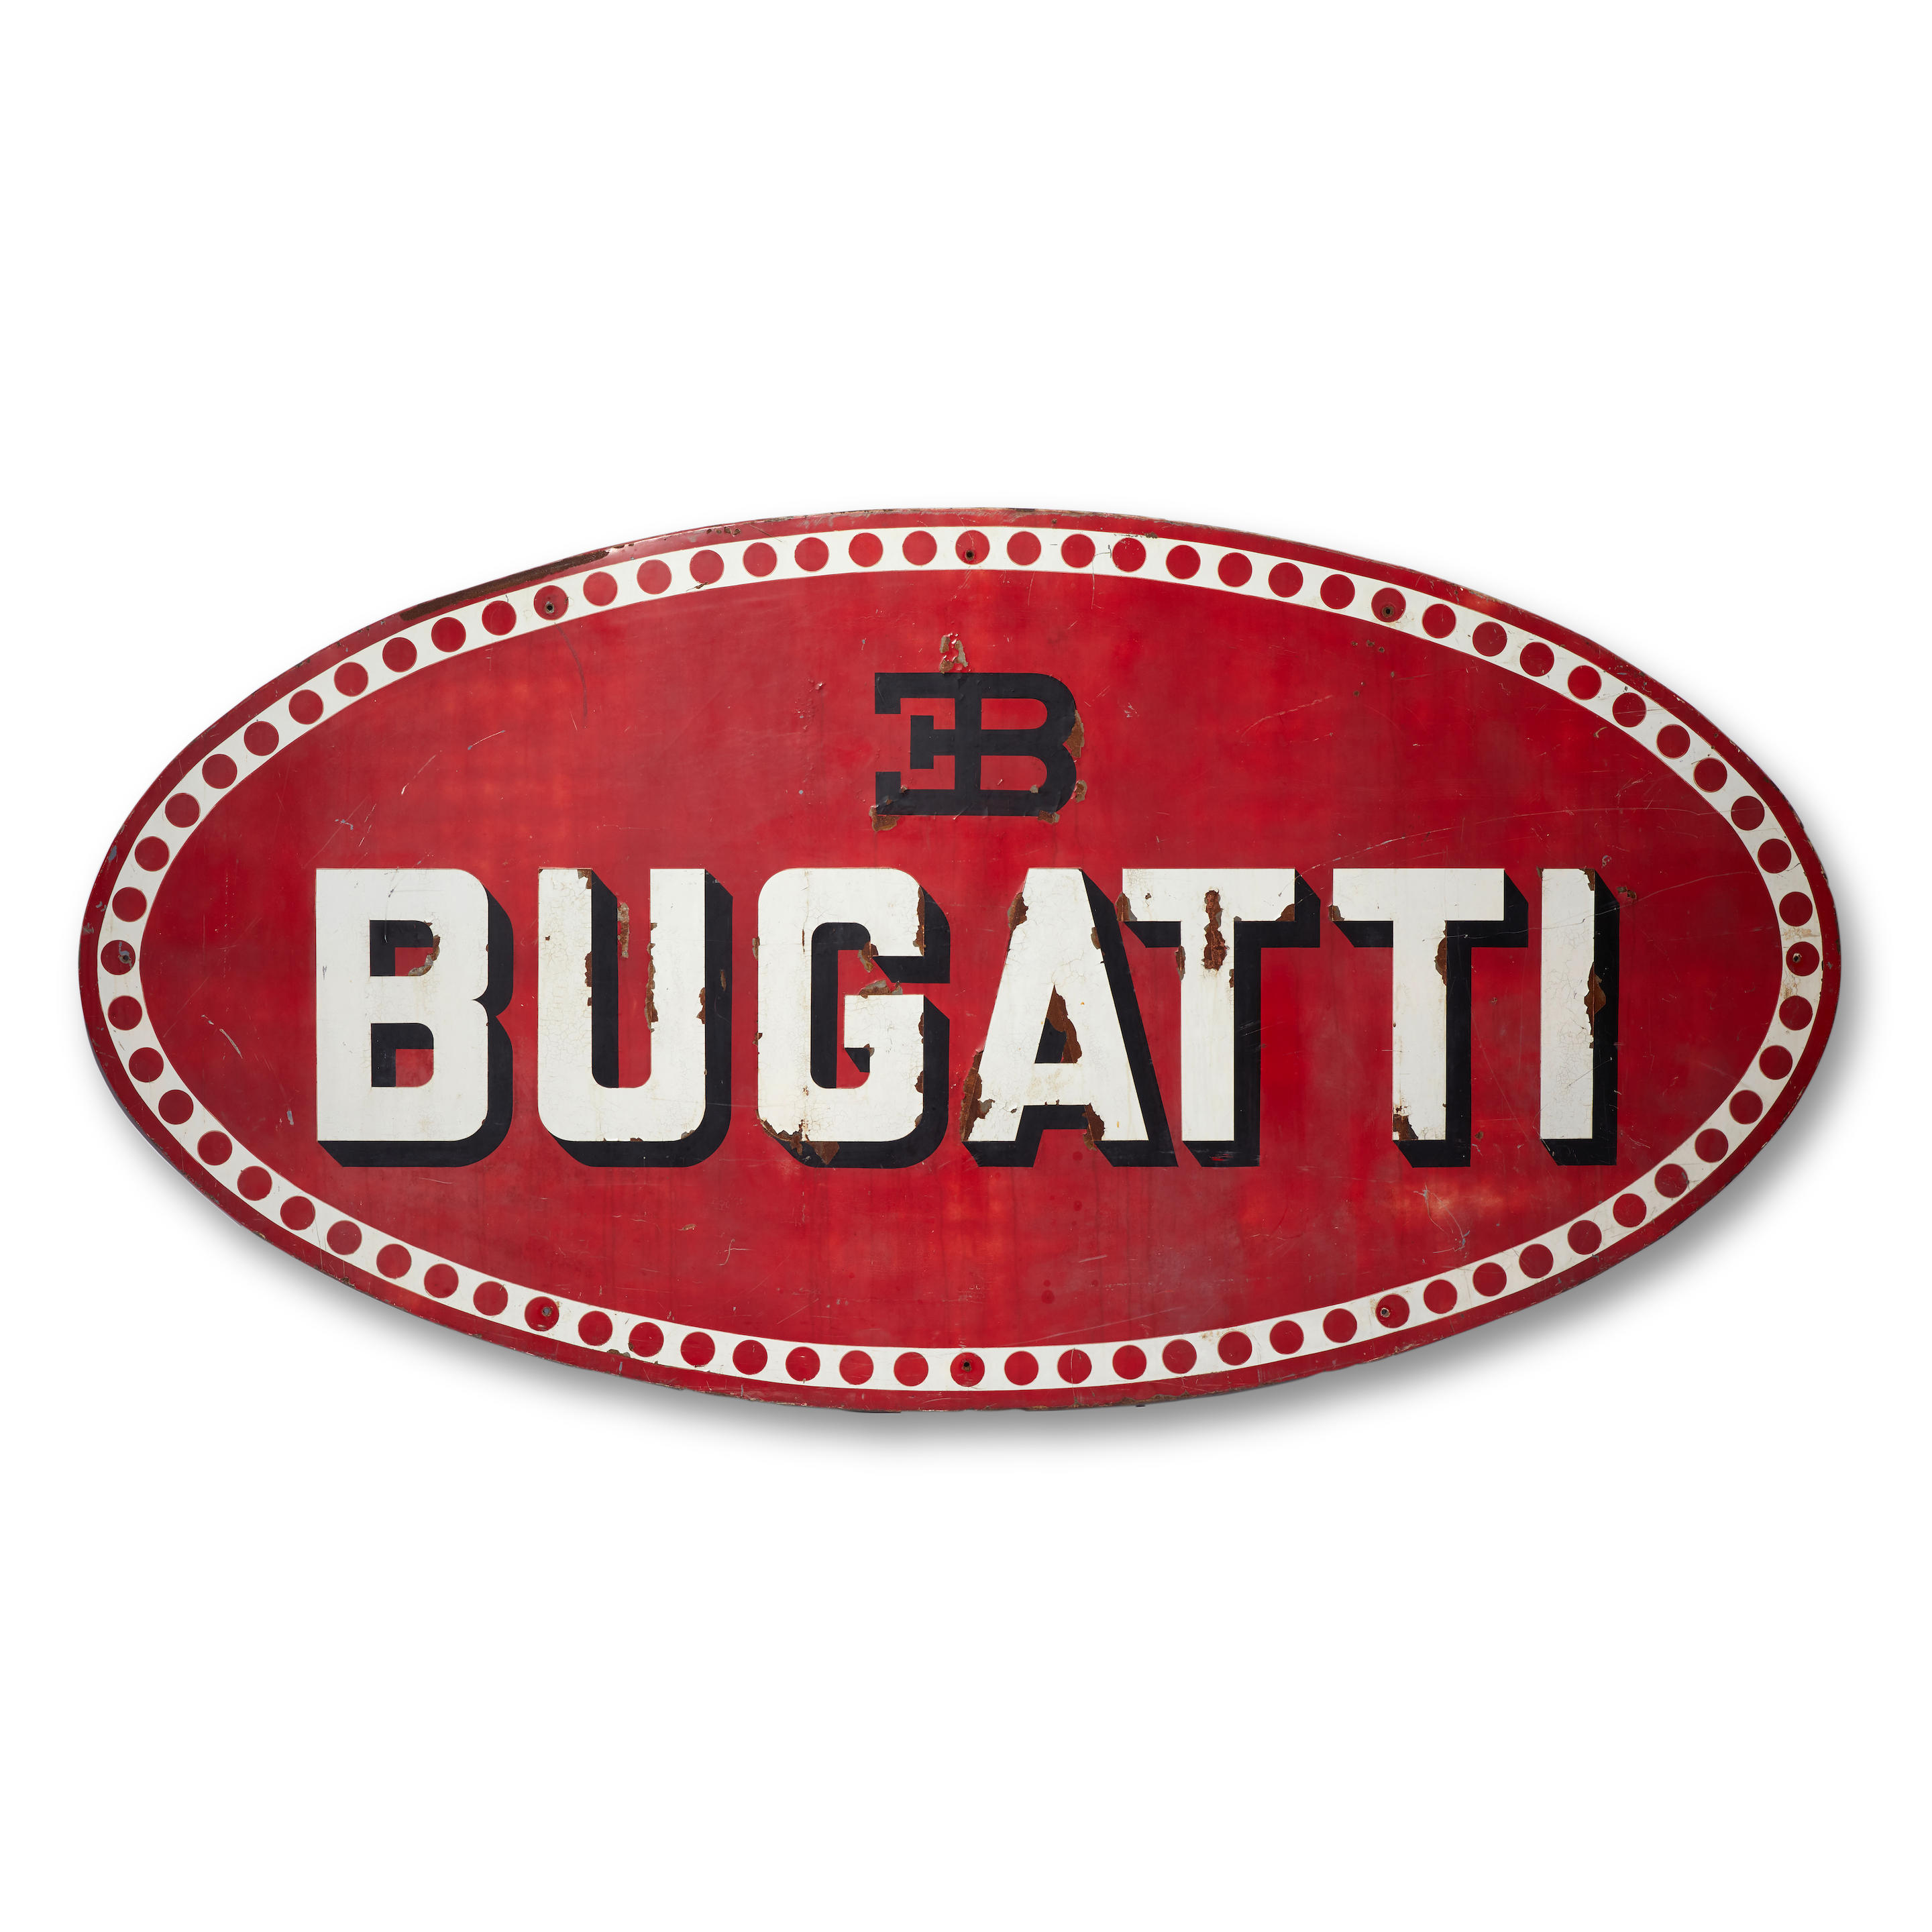 Bugatti sign